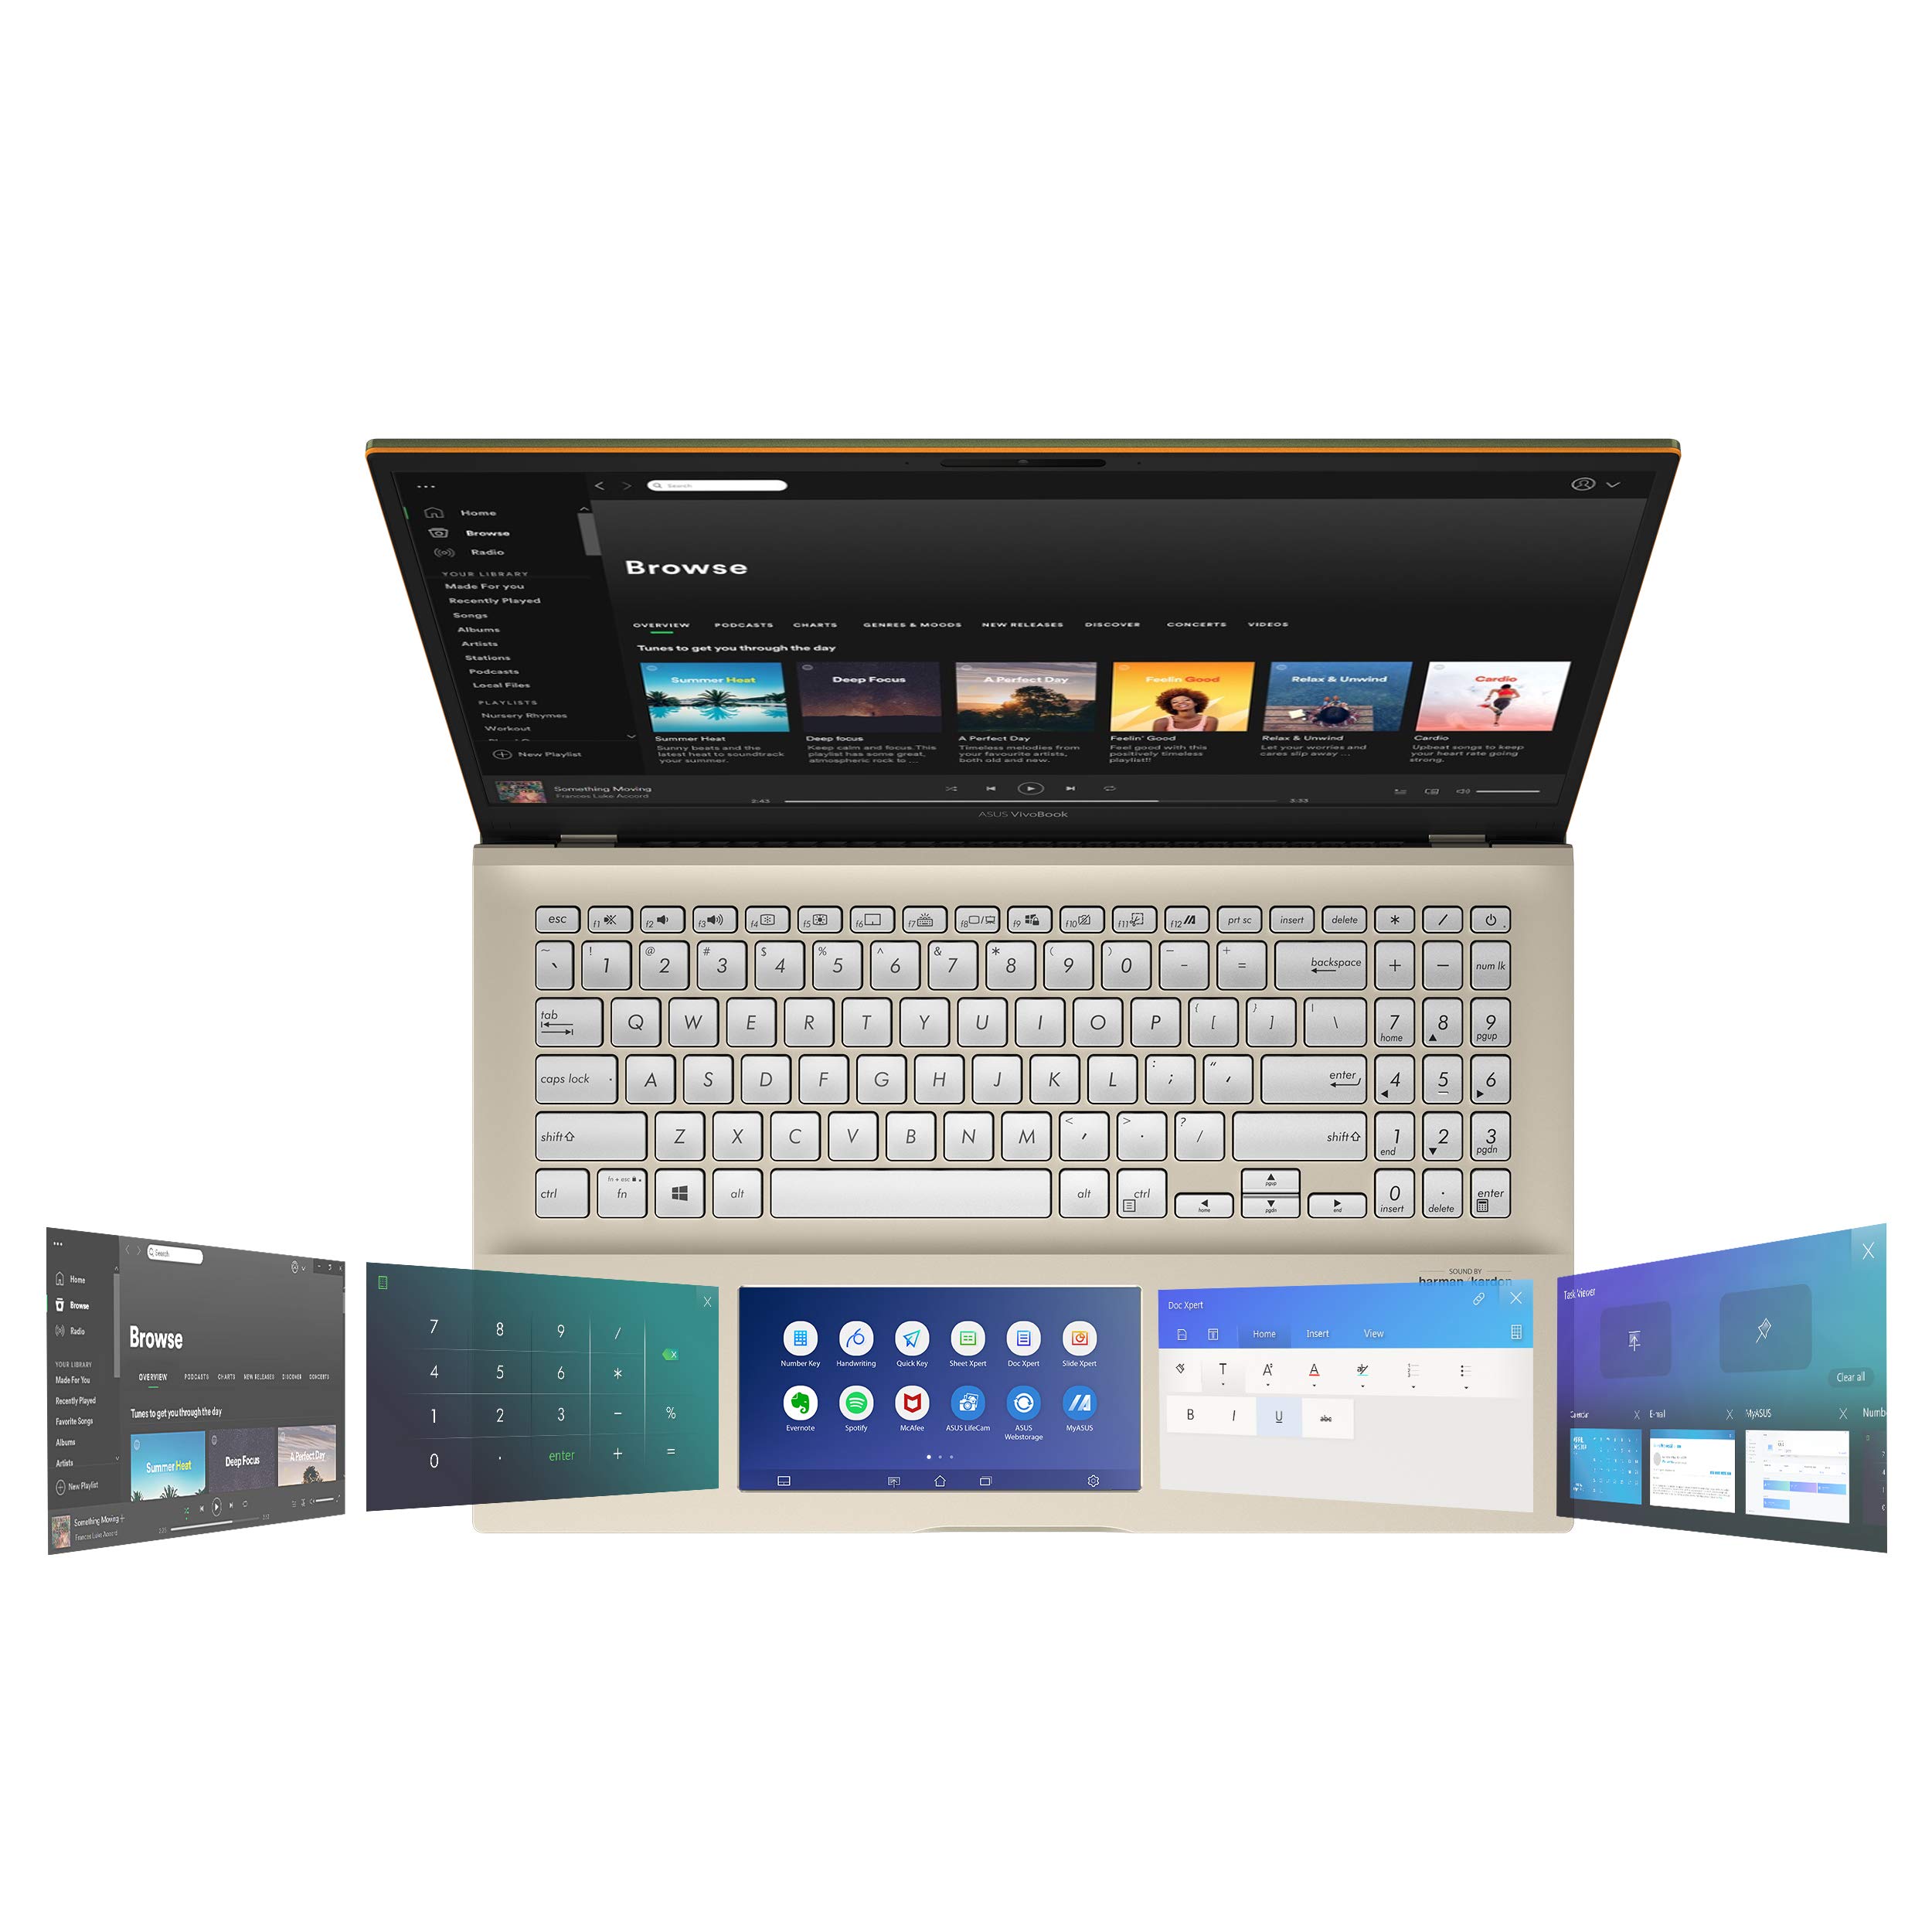 ASUS VivoBook S15 Thin & Light Laptop, 15.6” FHD, Intel Core i5-8265U CPU, 8GB DDR4 RAM, PCIe NVMe 512GB SSD, Windows 10 Home, S532FA-DB55-GN, Moss Green